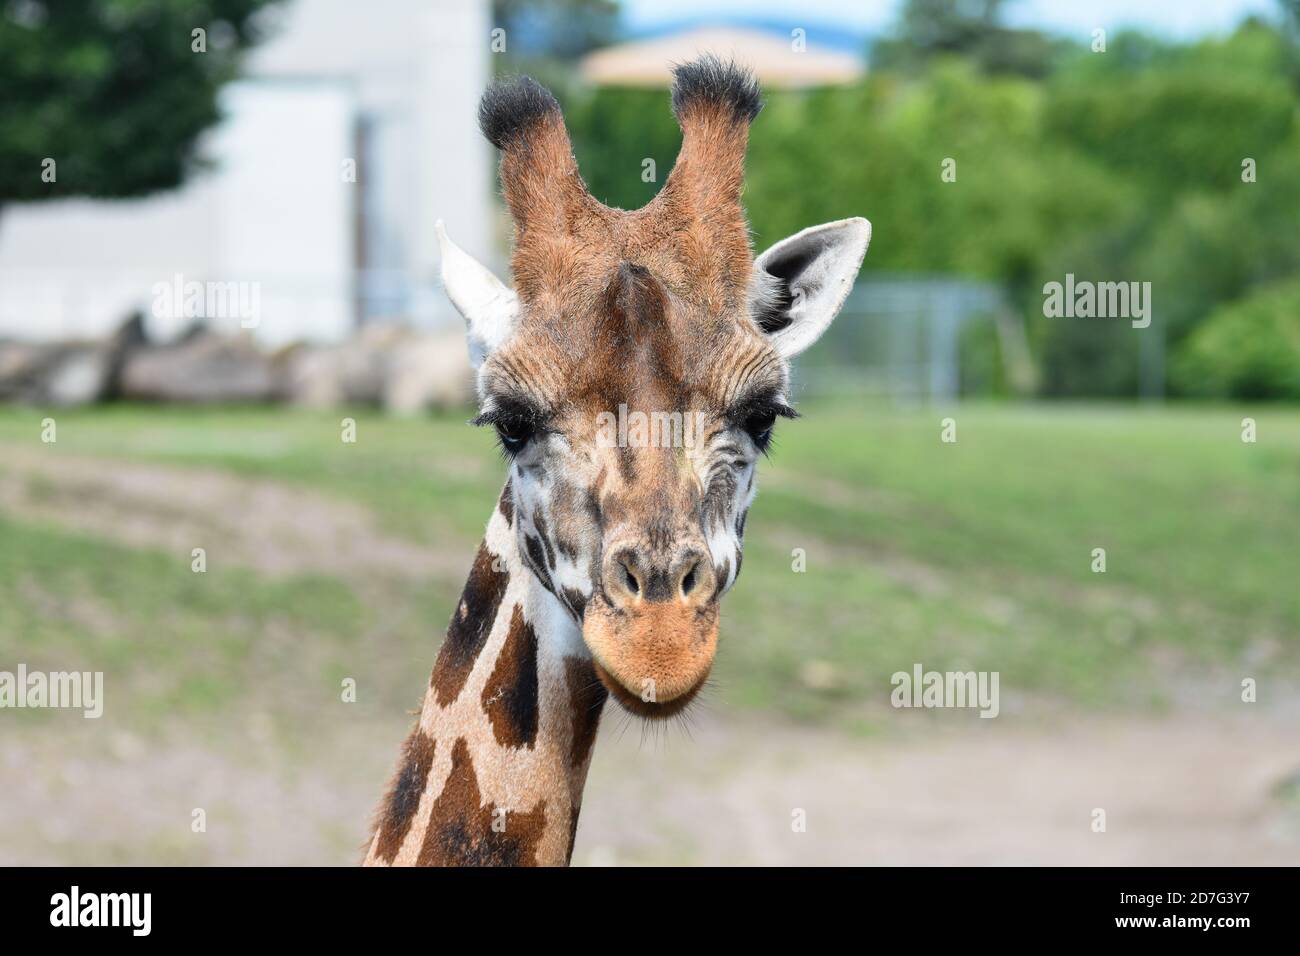 Eine Giraffe im Zoo Granby, Granby, Kanada Stockfoto